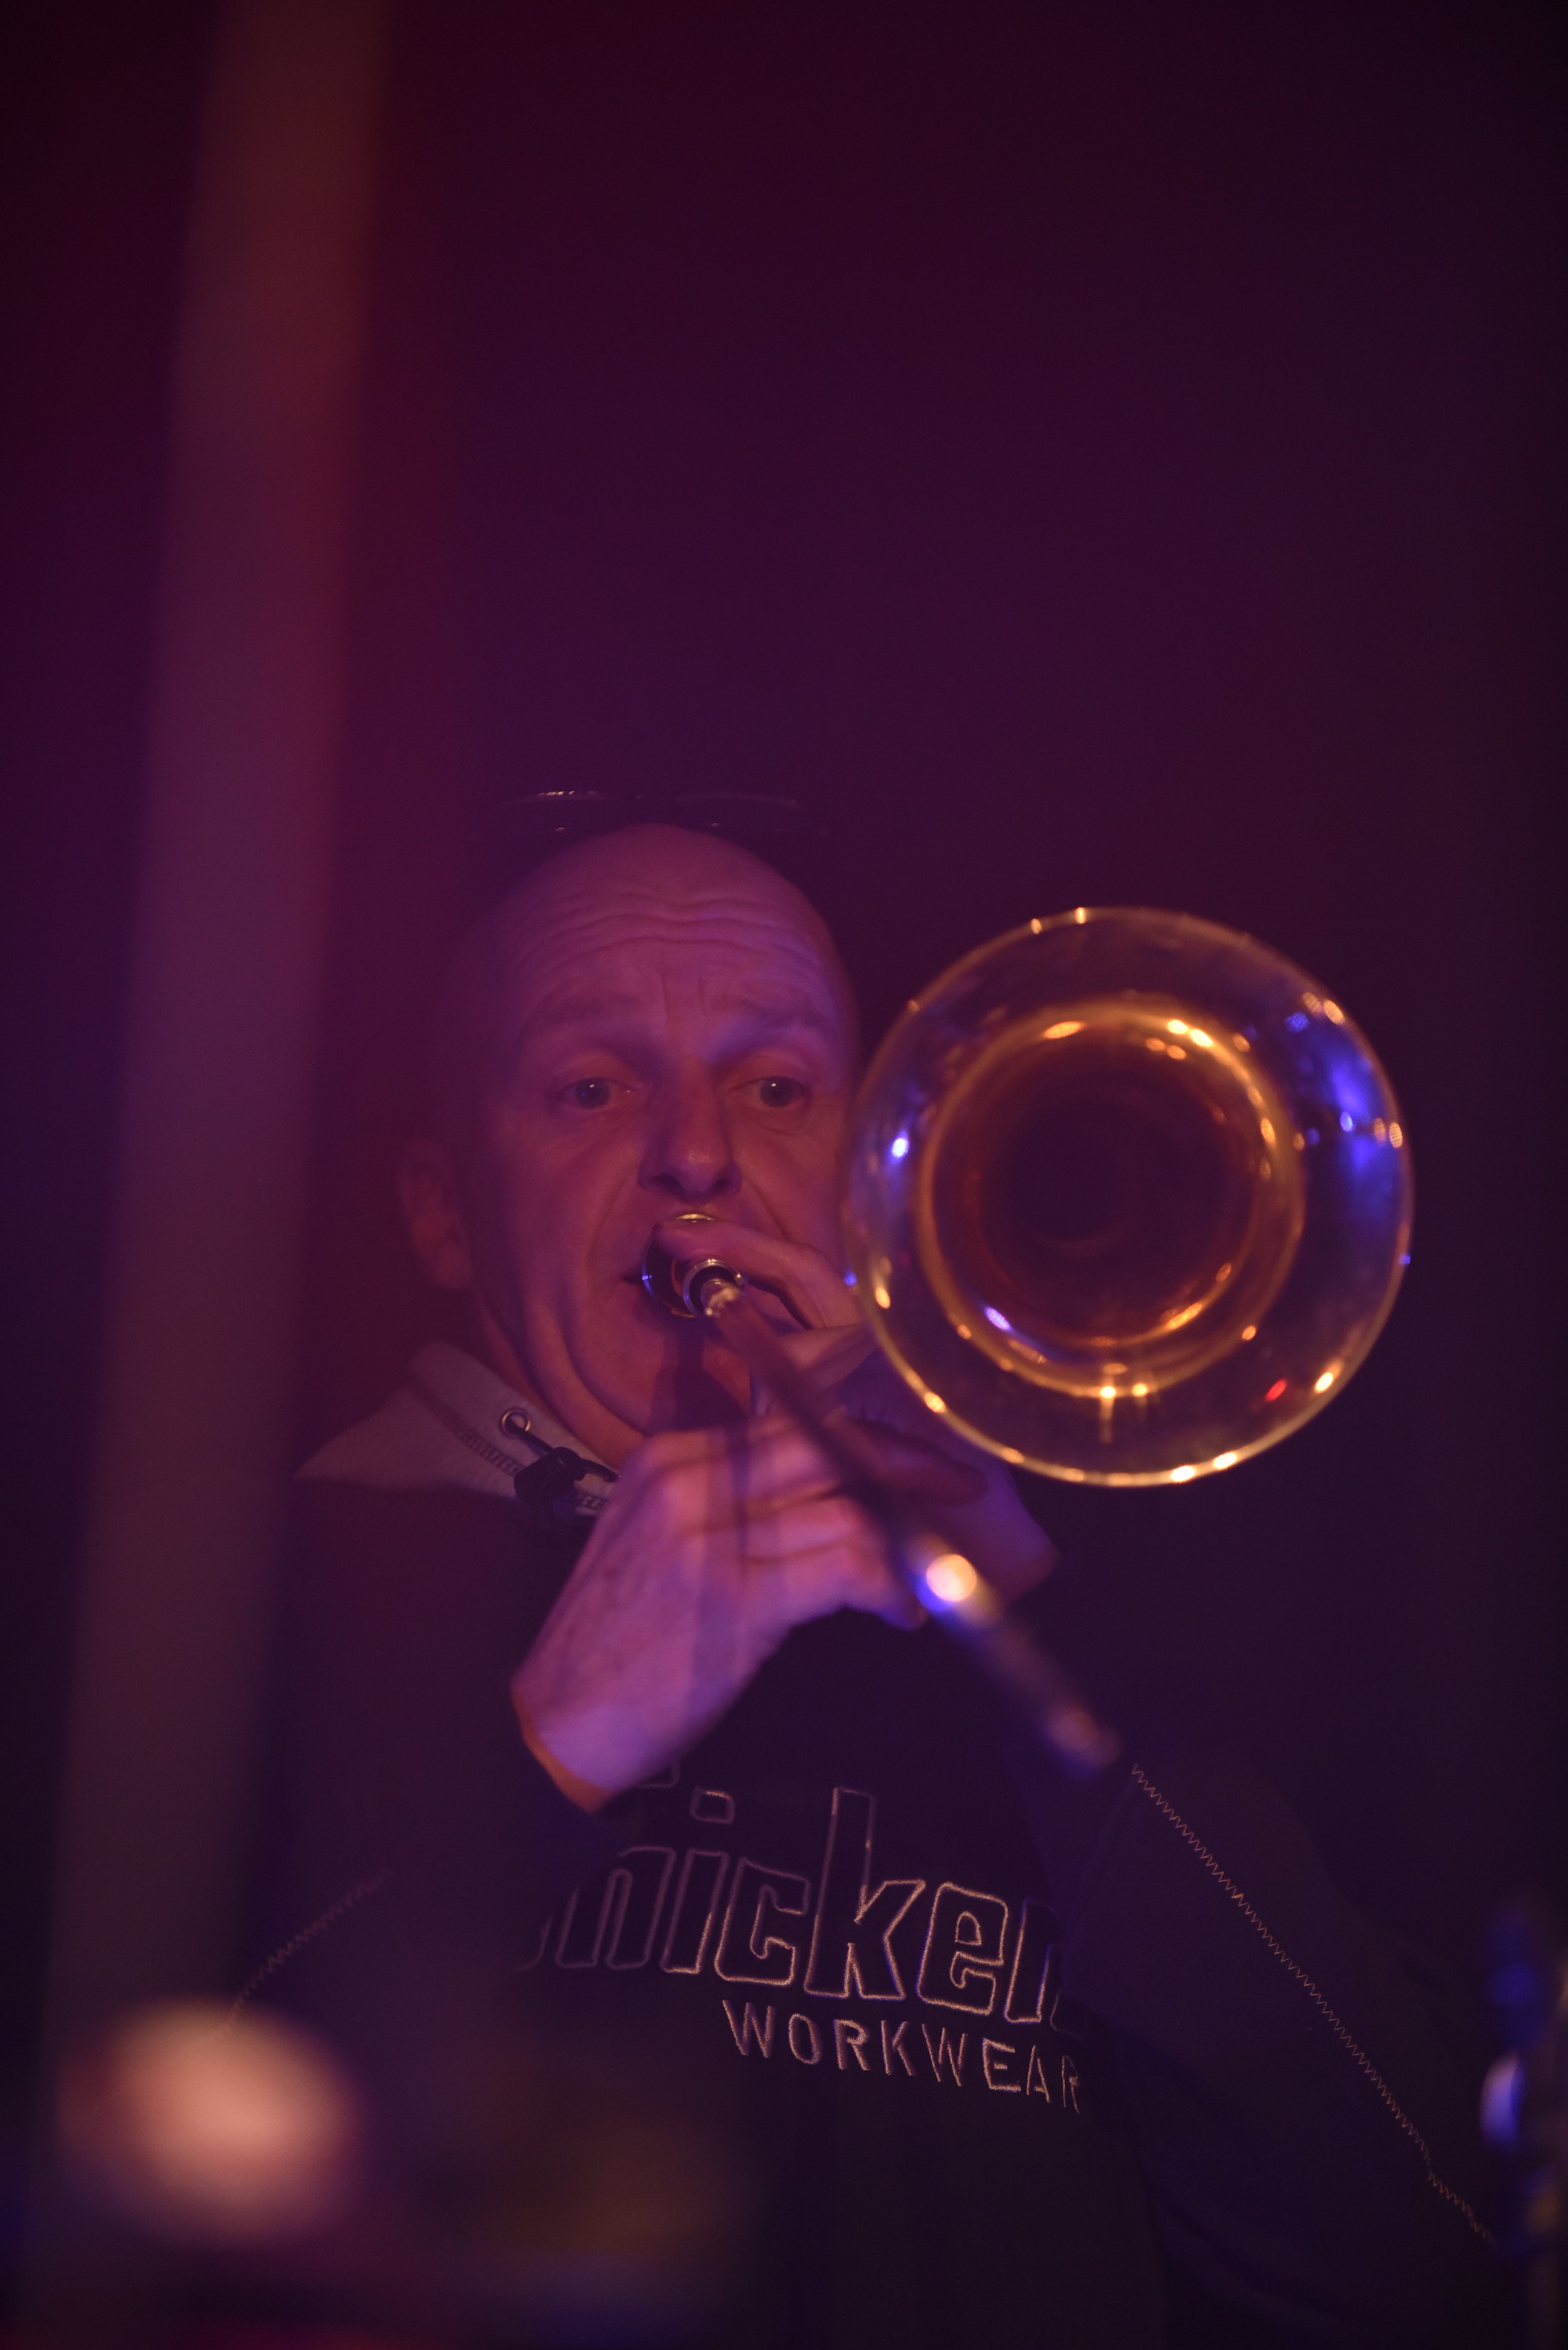 Hannes "Trombone " Braun